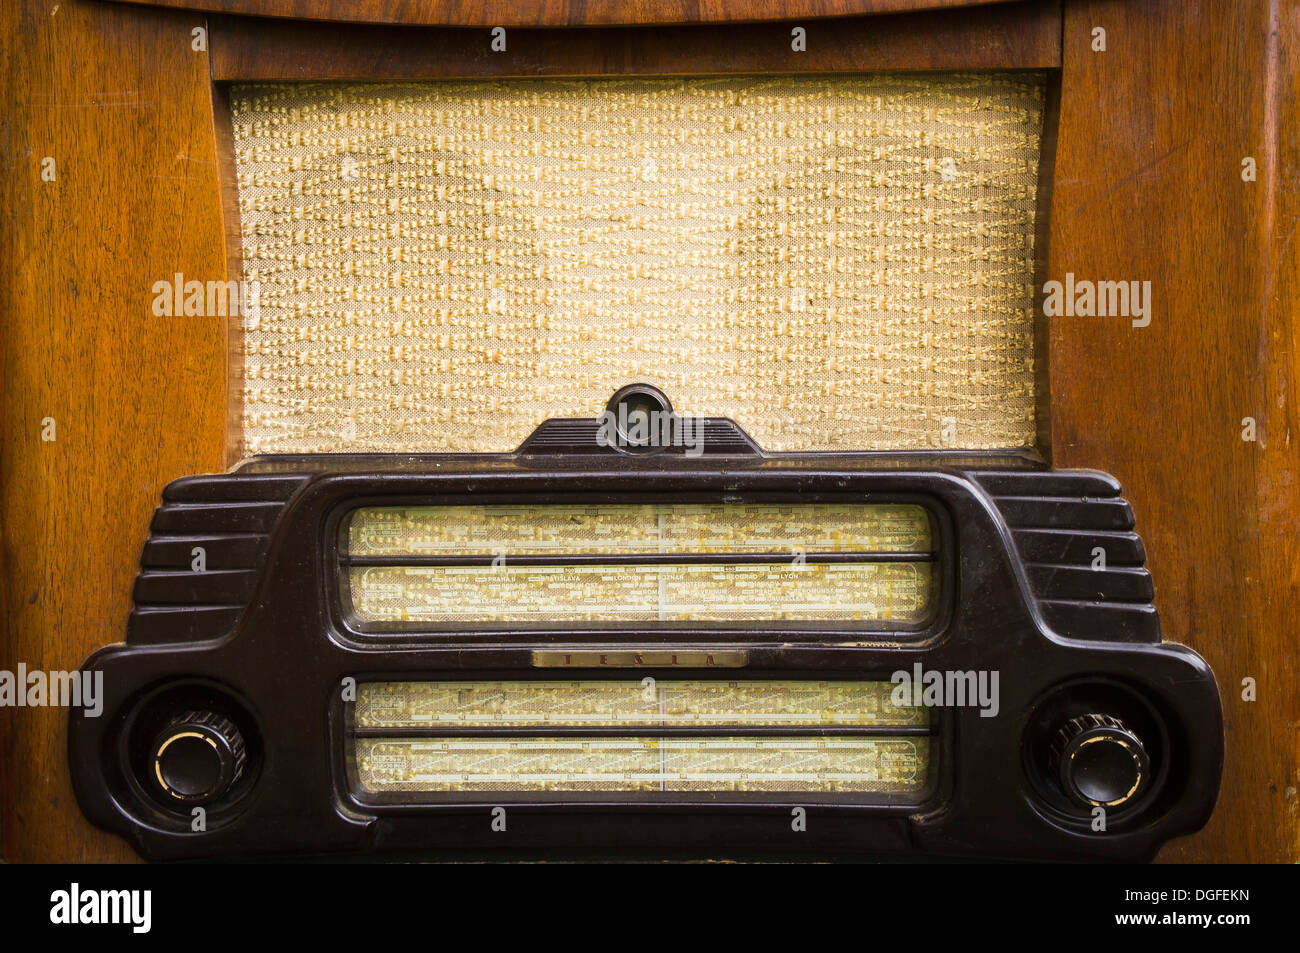 Radio tesla hi-res stock photography and images - Alamy